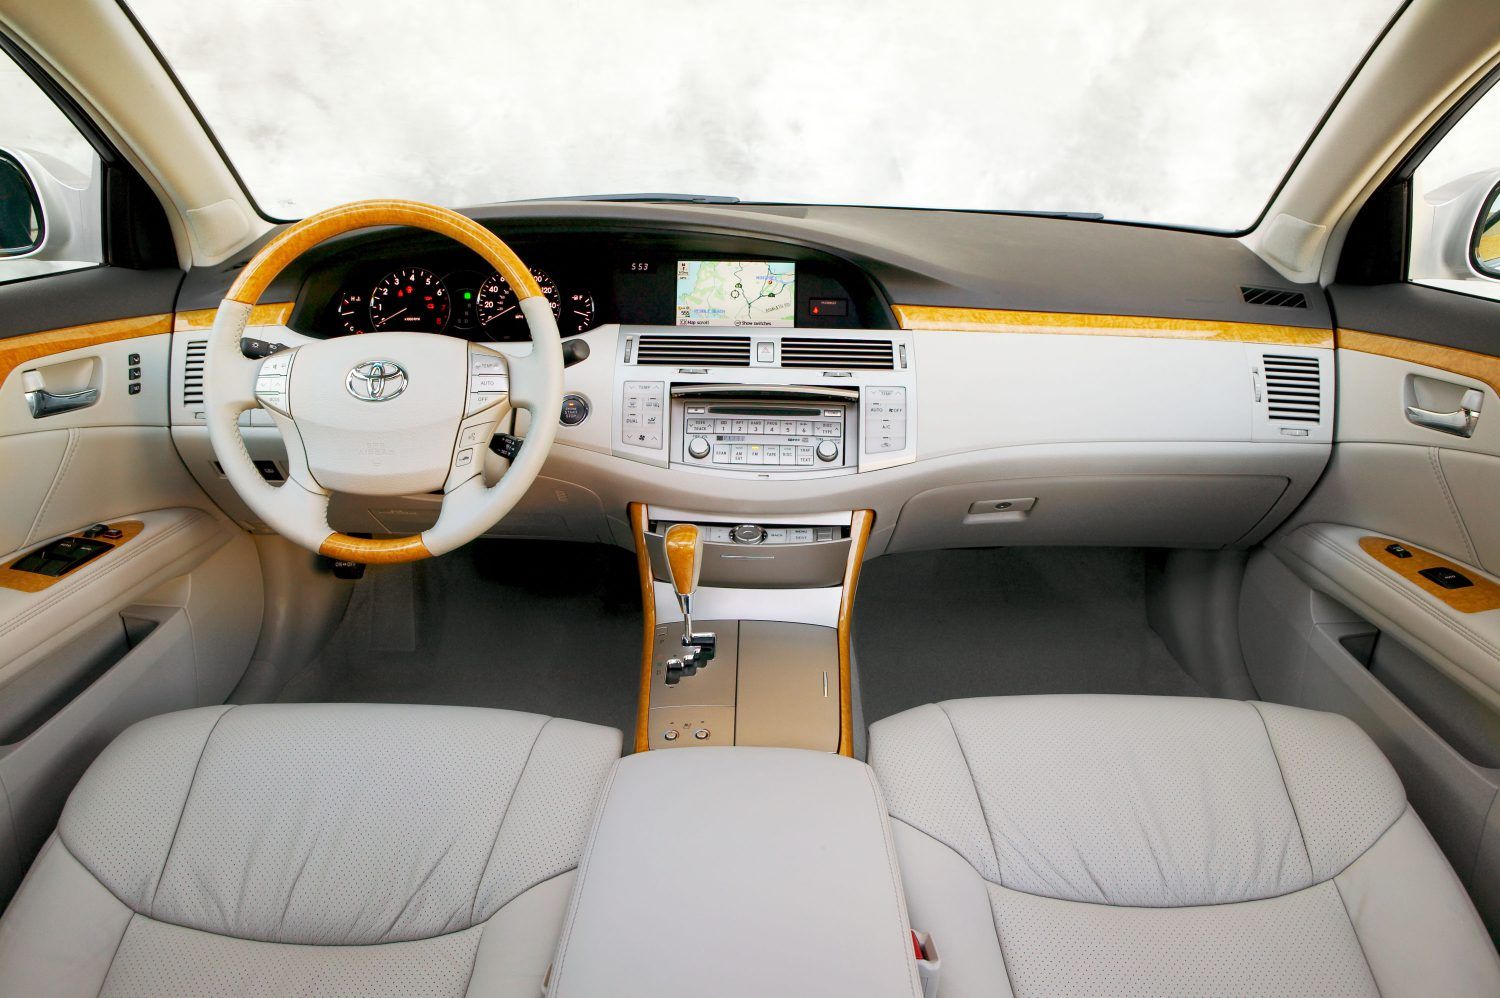 The 2005 Toyota Avalon Limited Edition Interior.